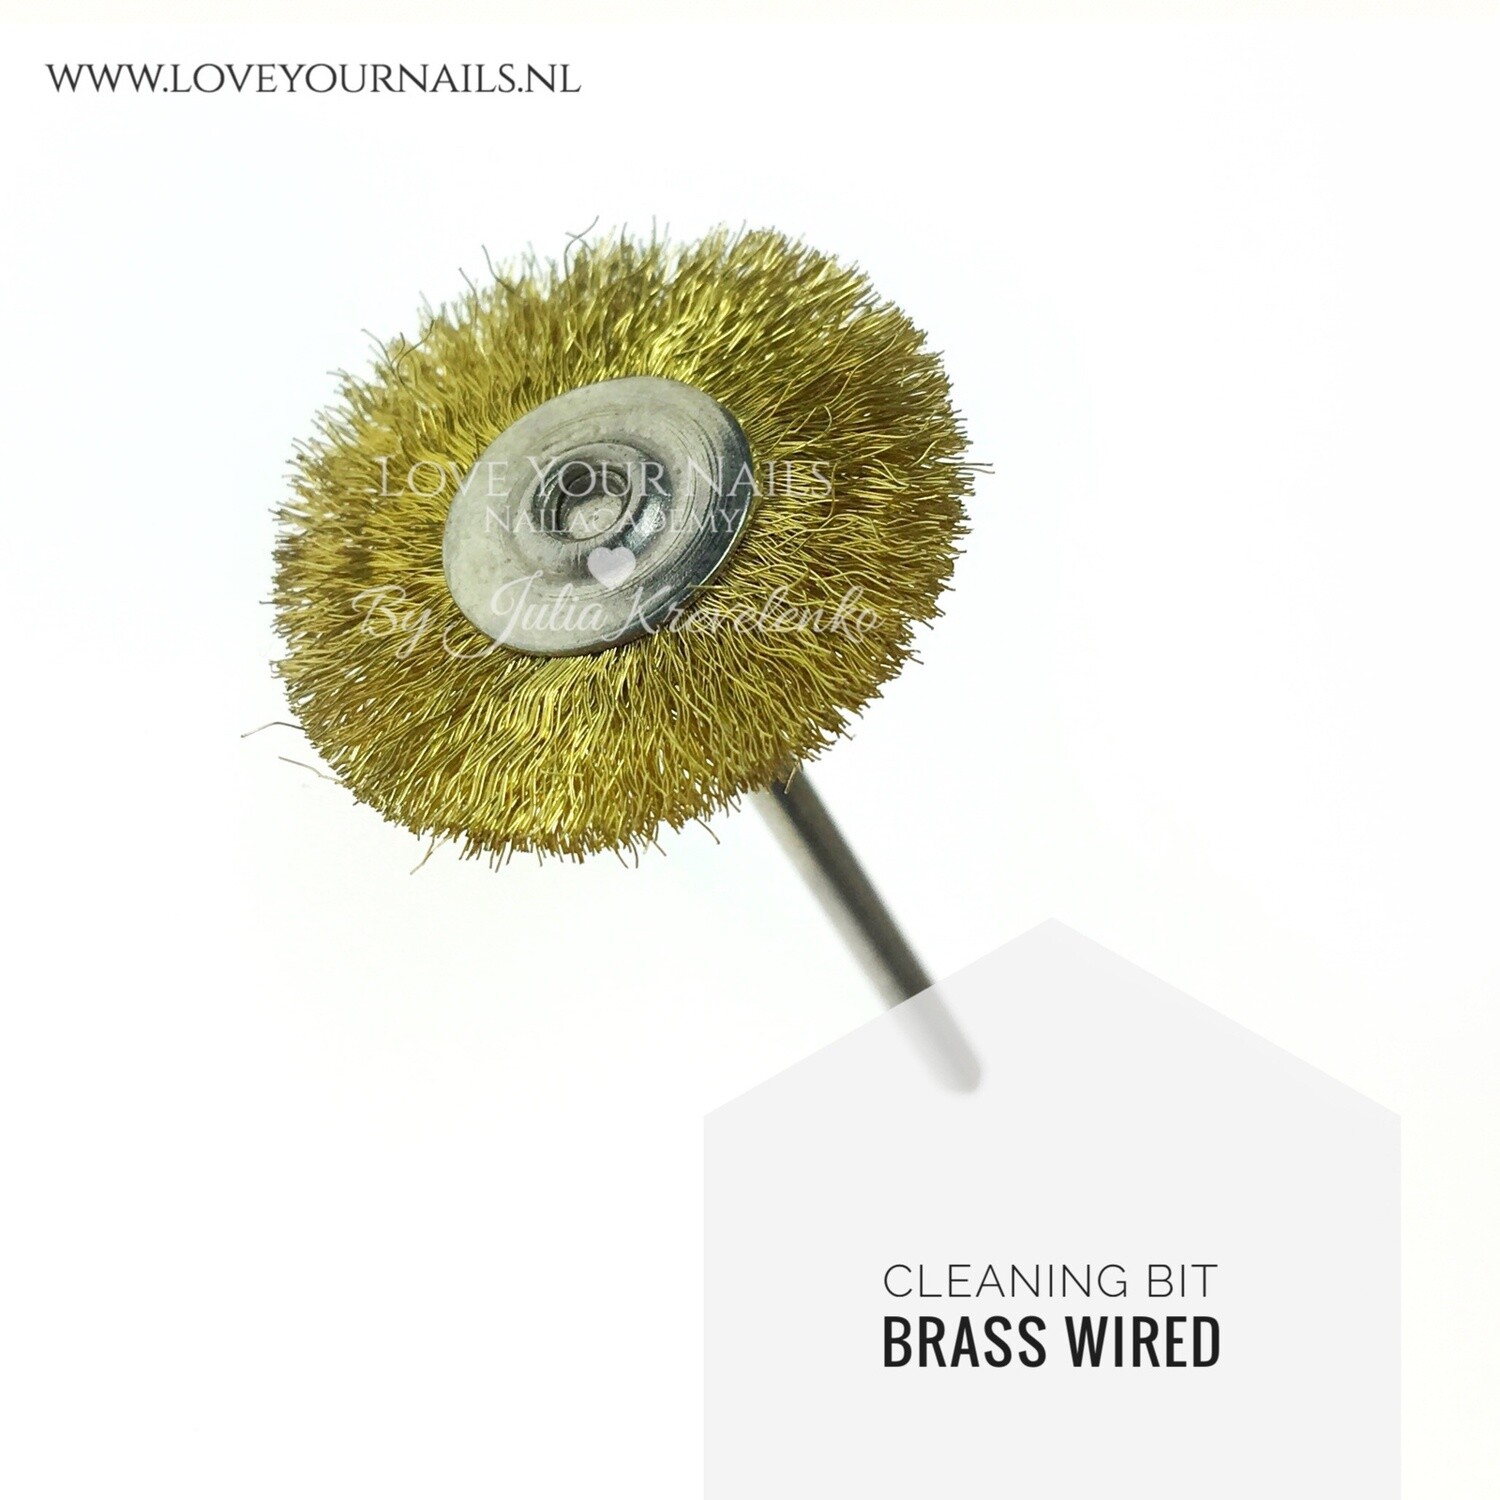 Cleaning bit (Brass wires)